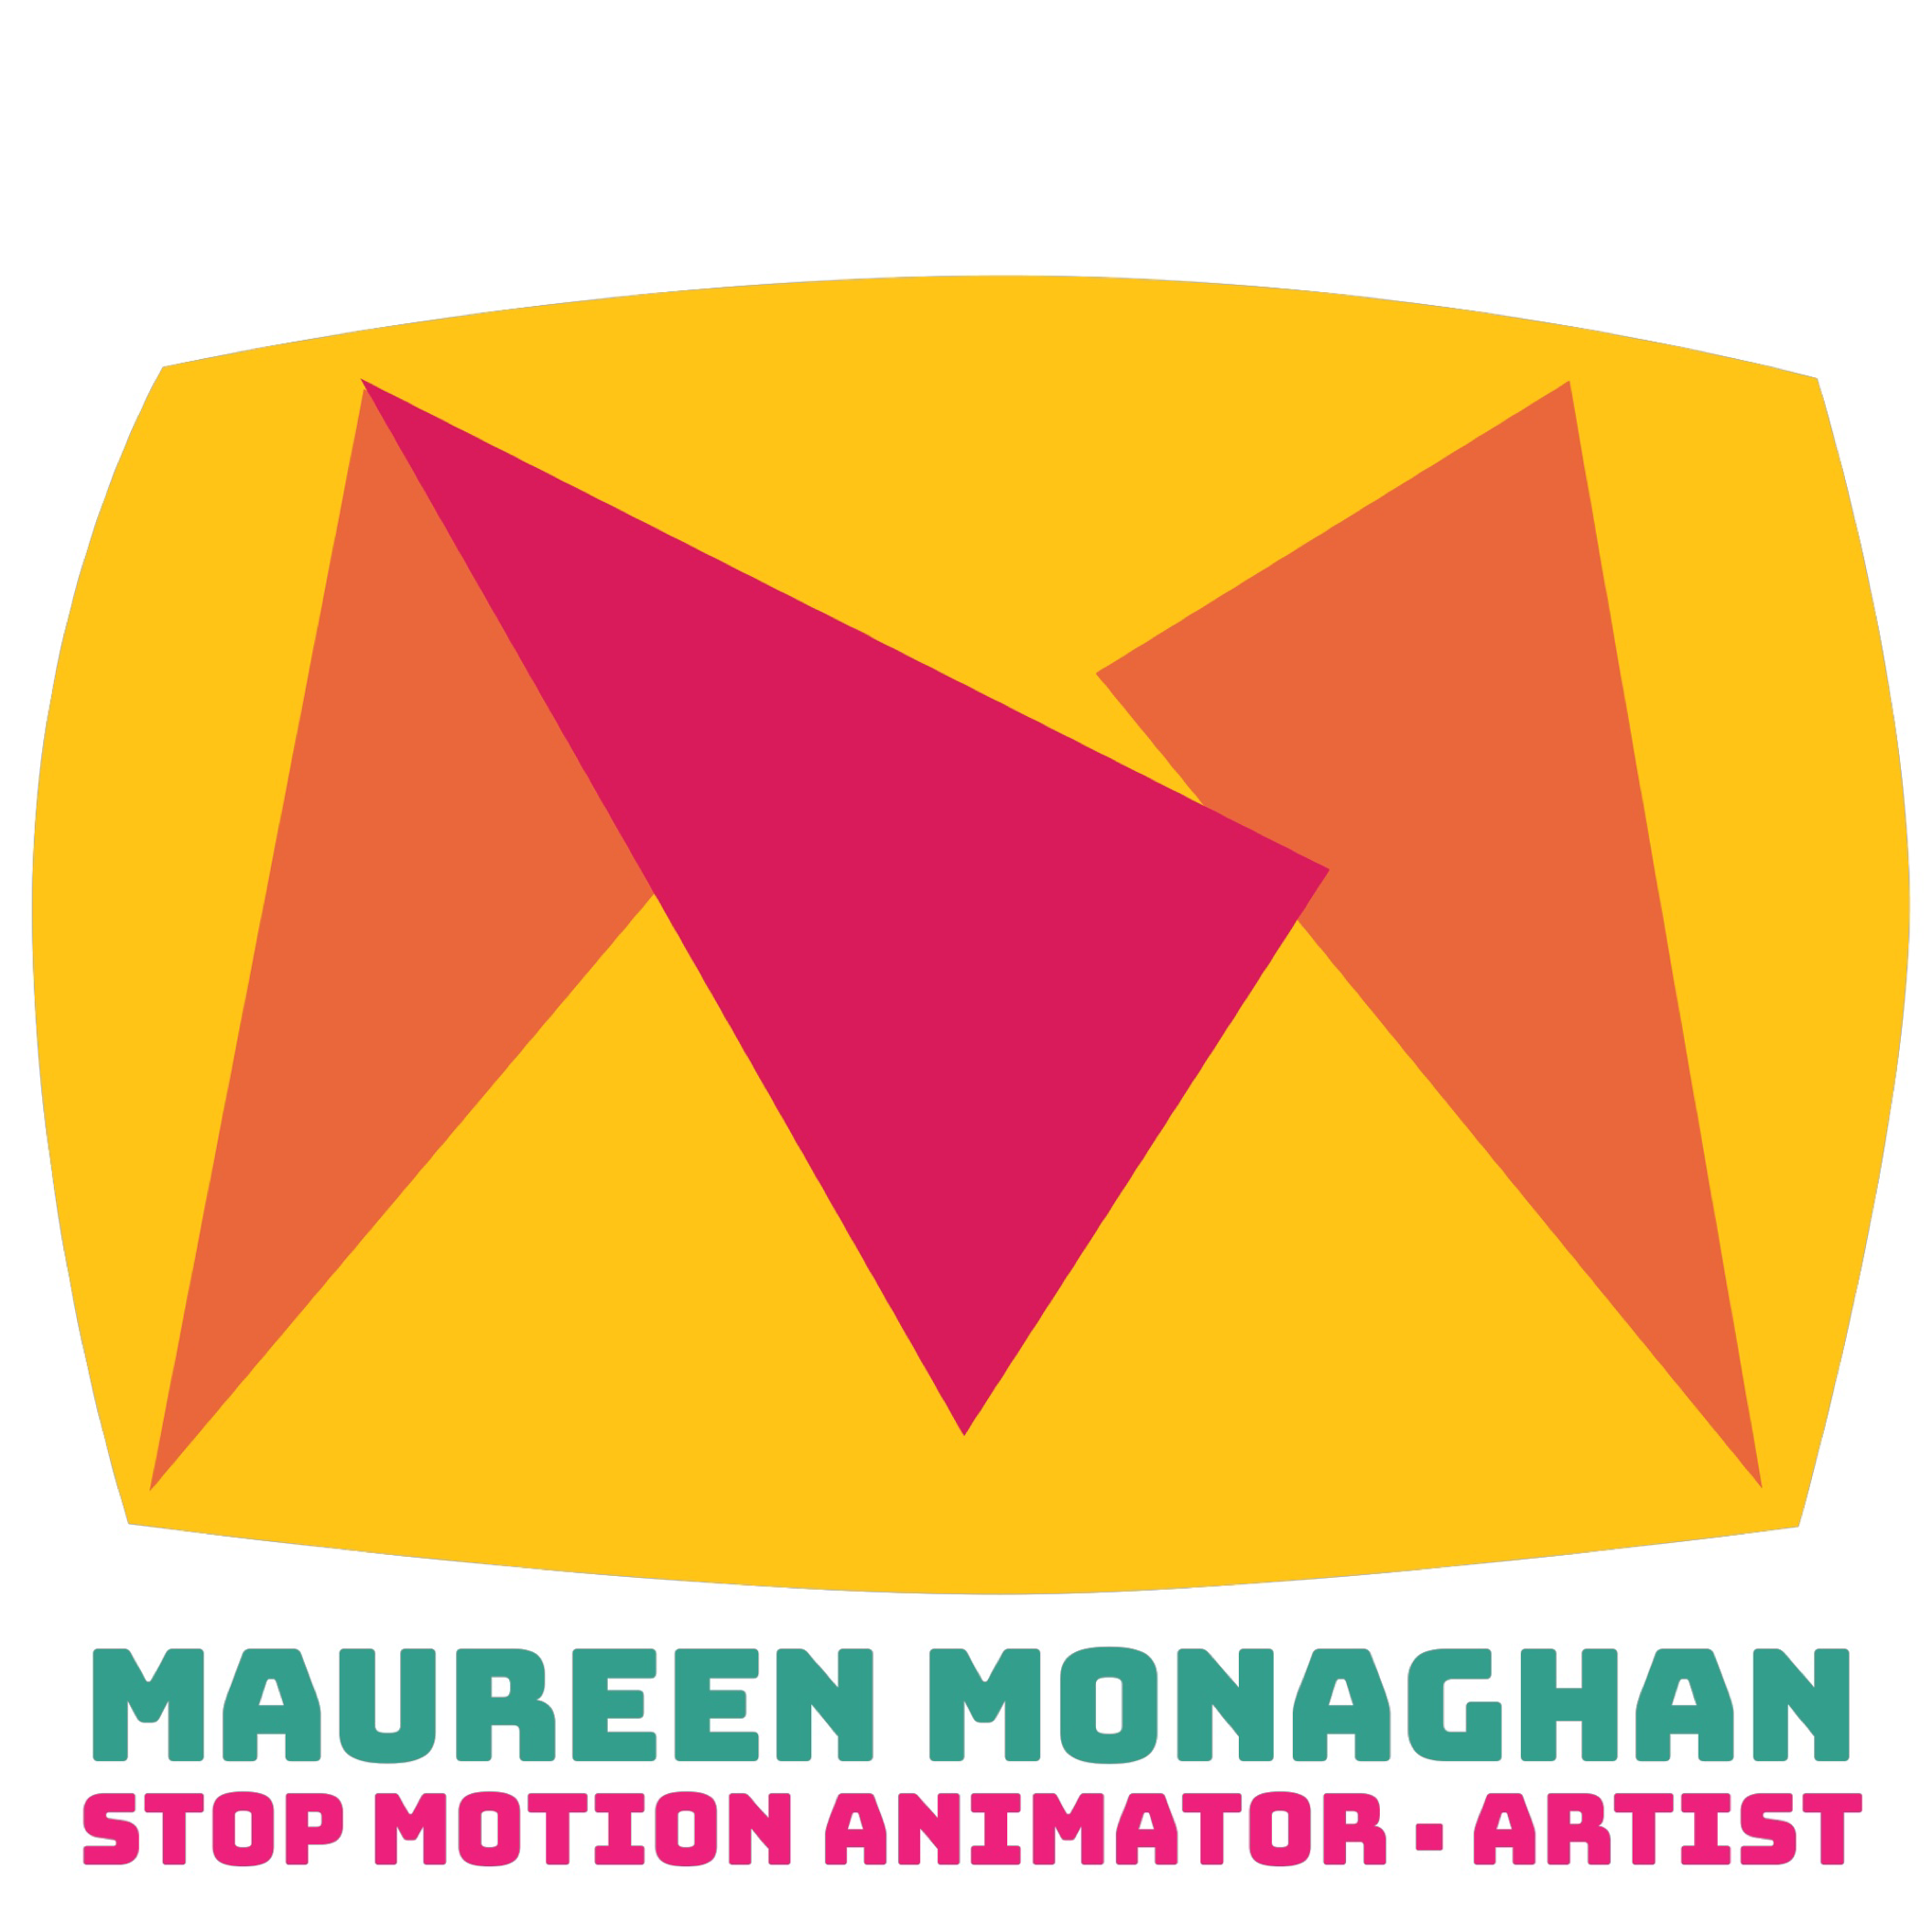 Maureen Monaghan